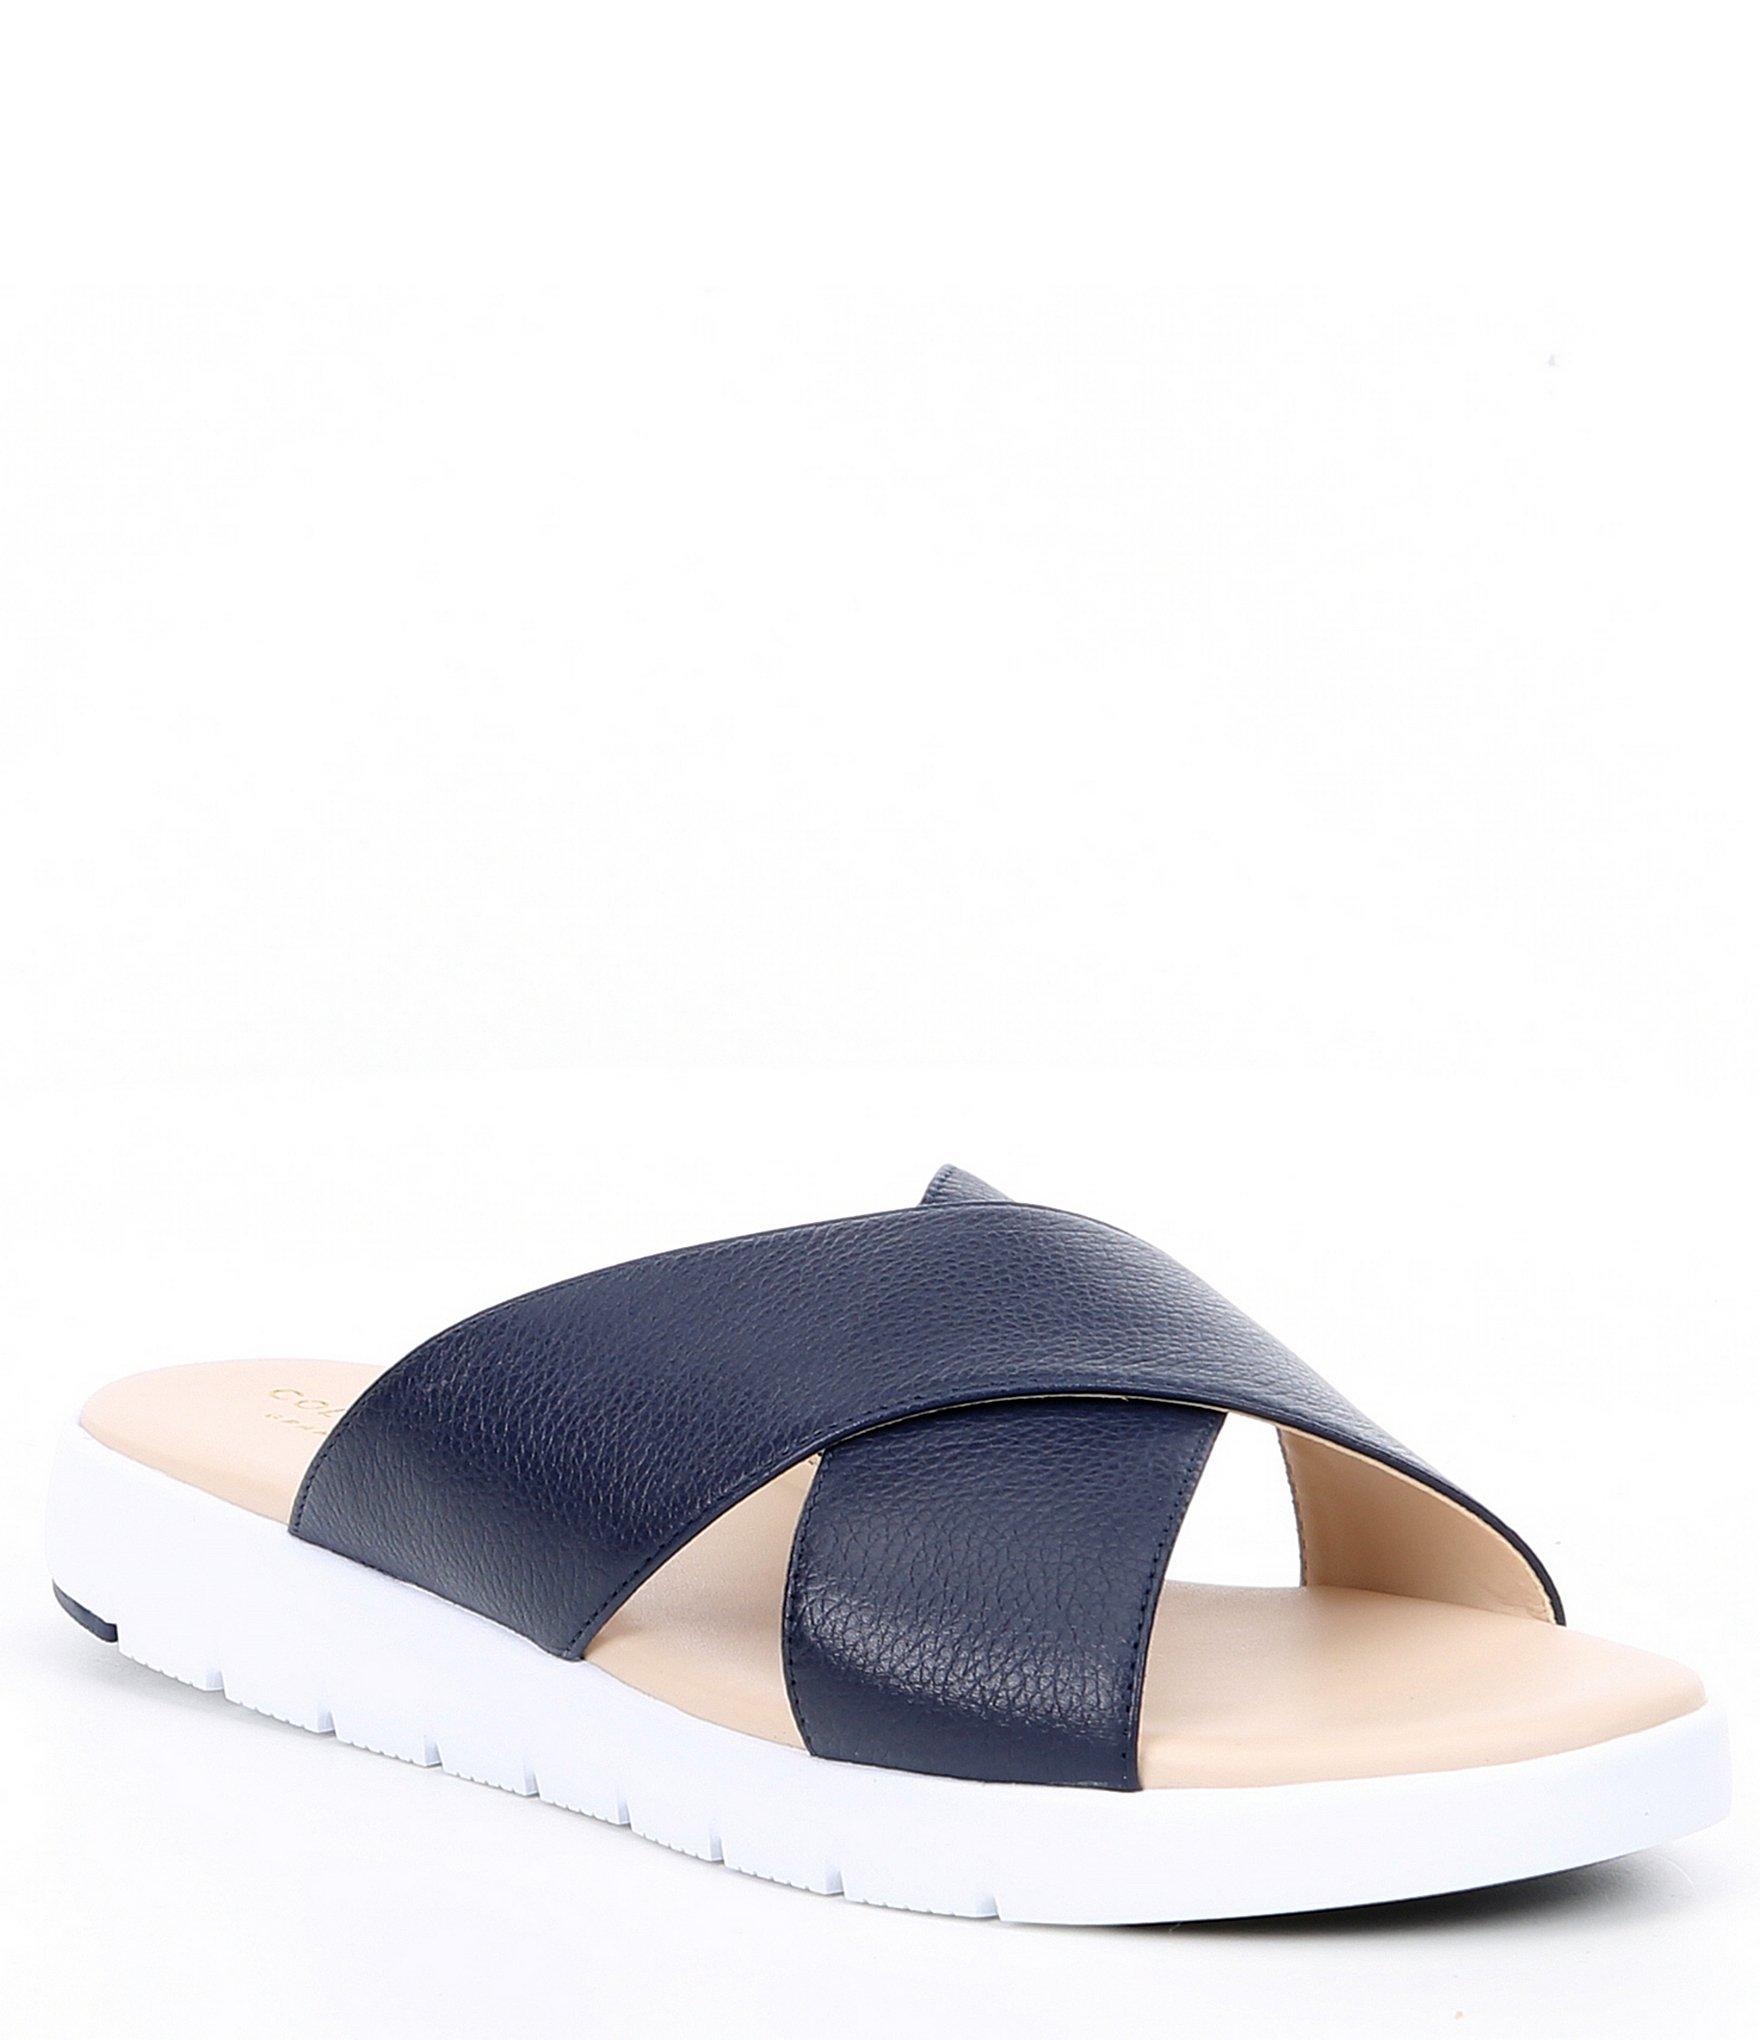 Cole Haan Zerogrand Leather Criss Cross Slide Sandals in Blue - Lyst